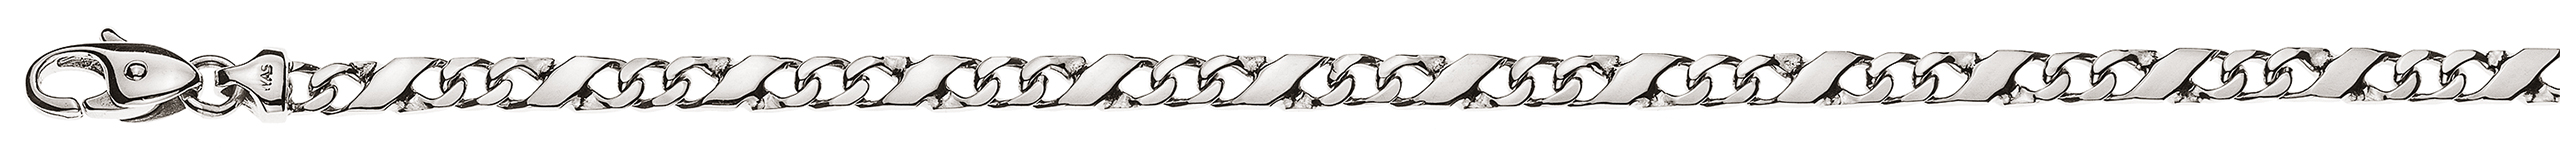 AURONOS Prestige Armband Carrera 18K Weissgold 19cm 4mm